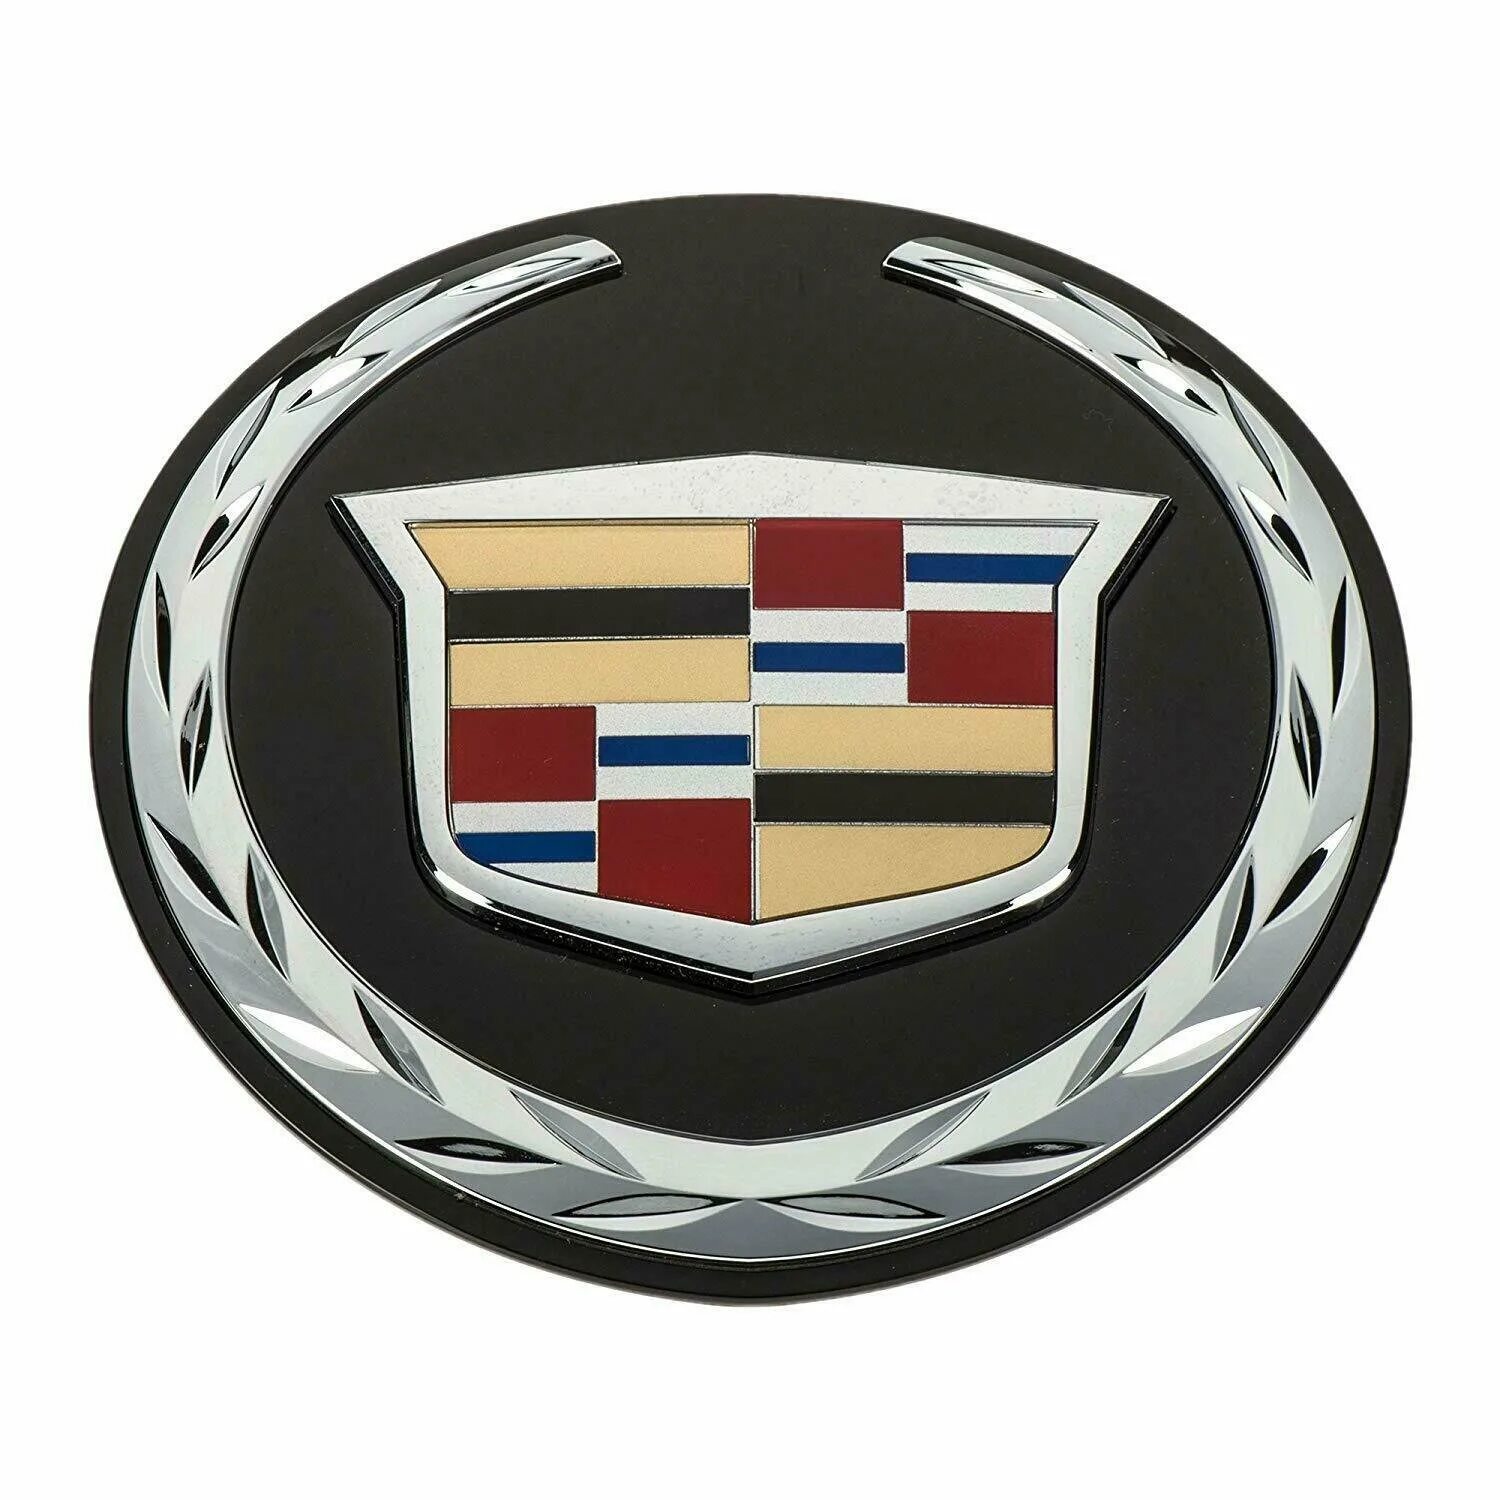 Кадиллак Эскалейд значок машины. Cadillac Escalade 2005 значок. Кадиллак Эскалейд шильдик. Значок Джили и Кадиллак.